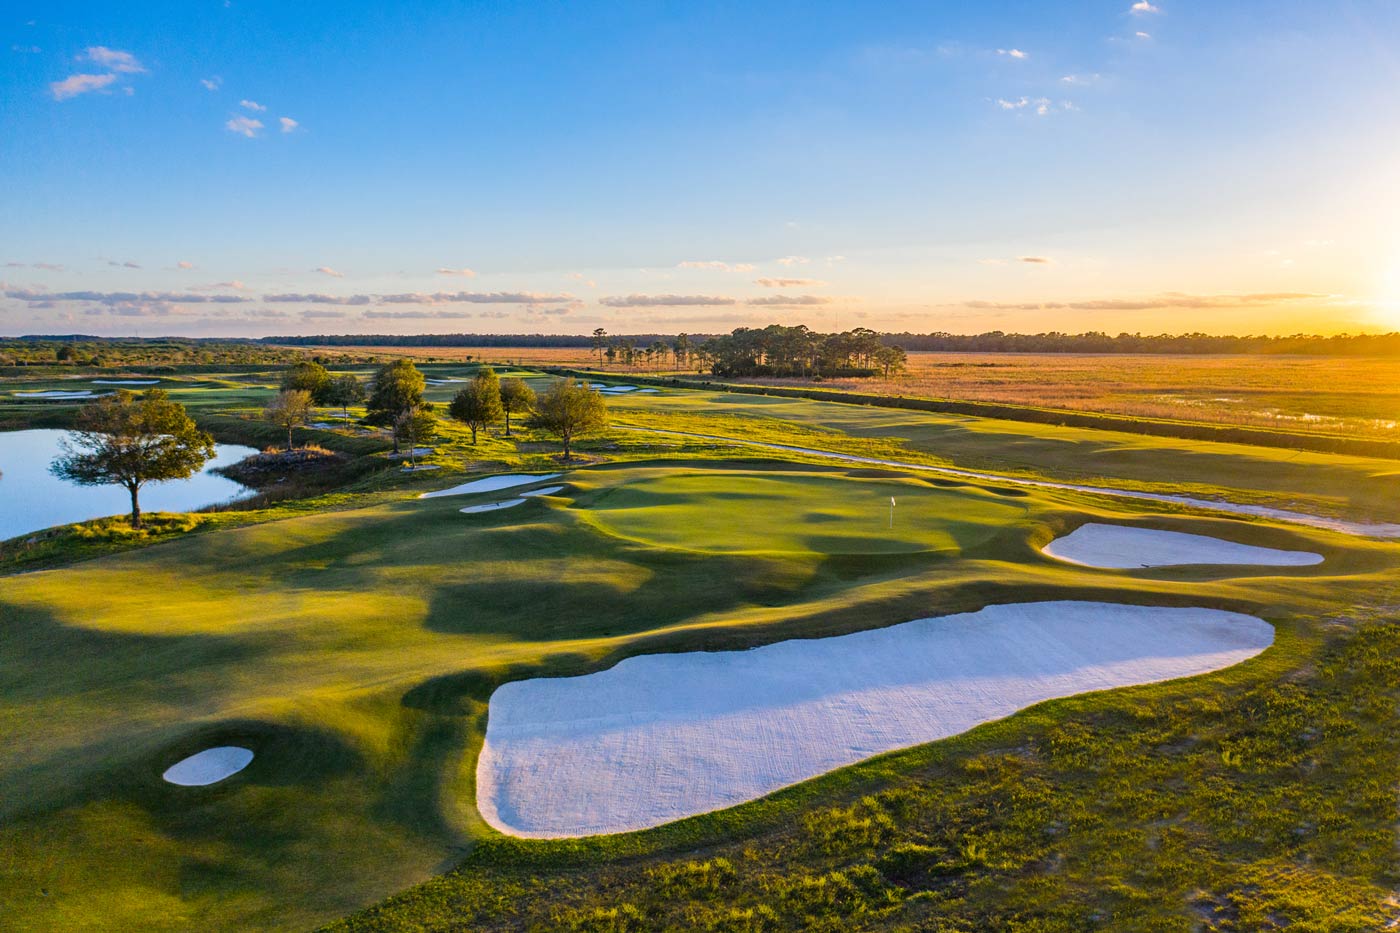 Take a tour of Michael Jordan's super-exclusive golf club, The Grove XXIII